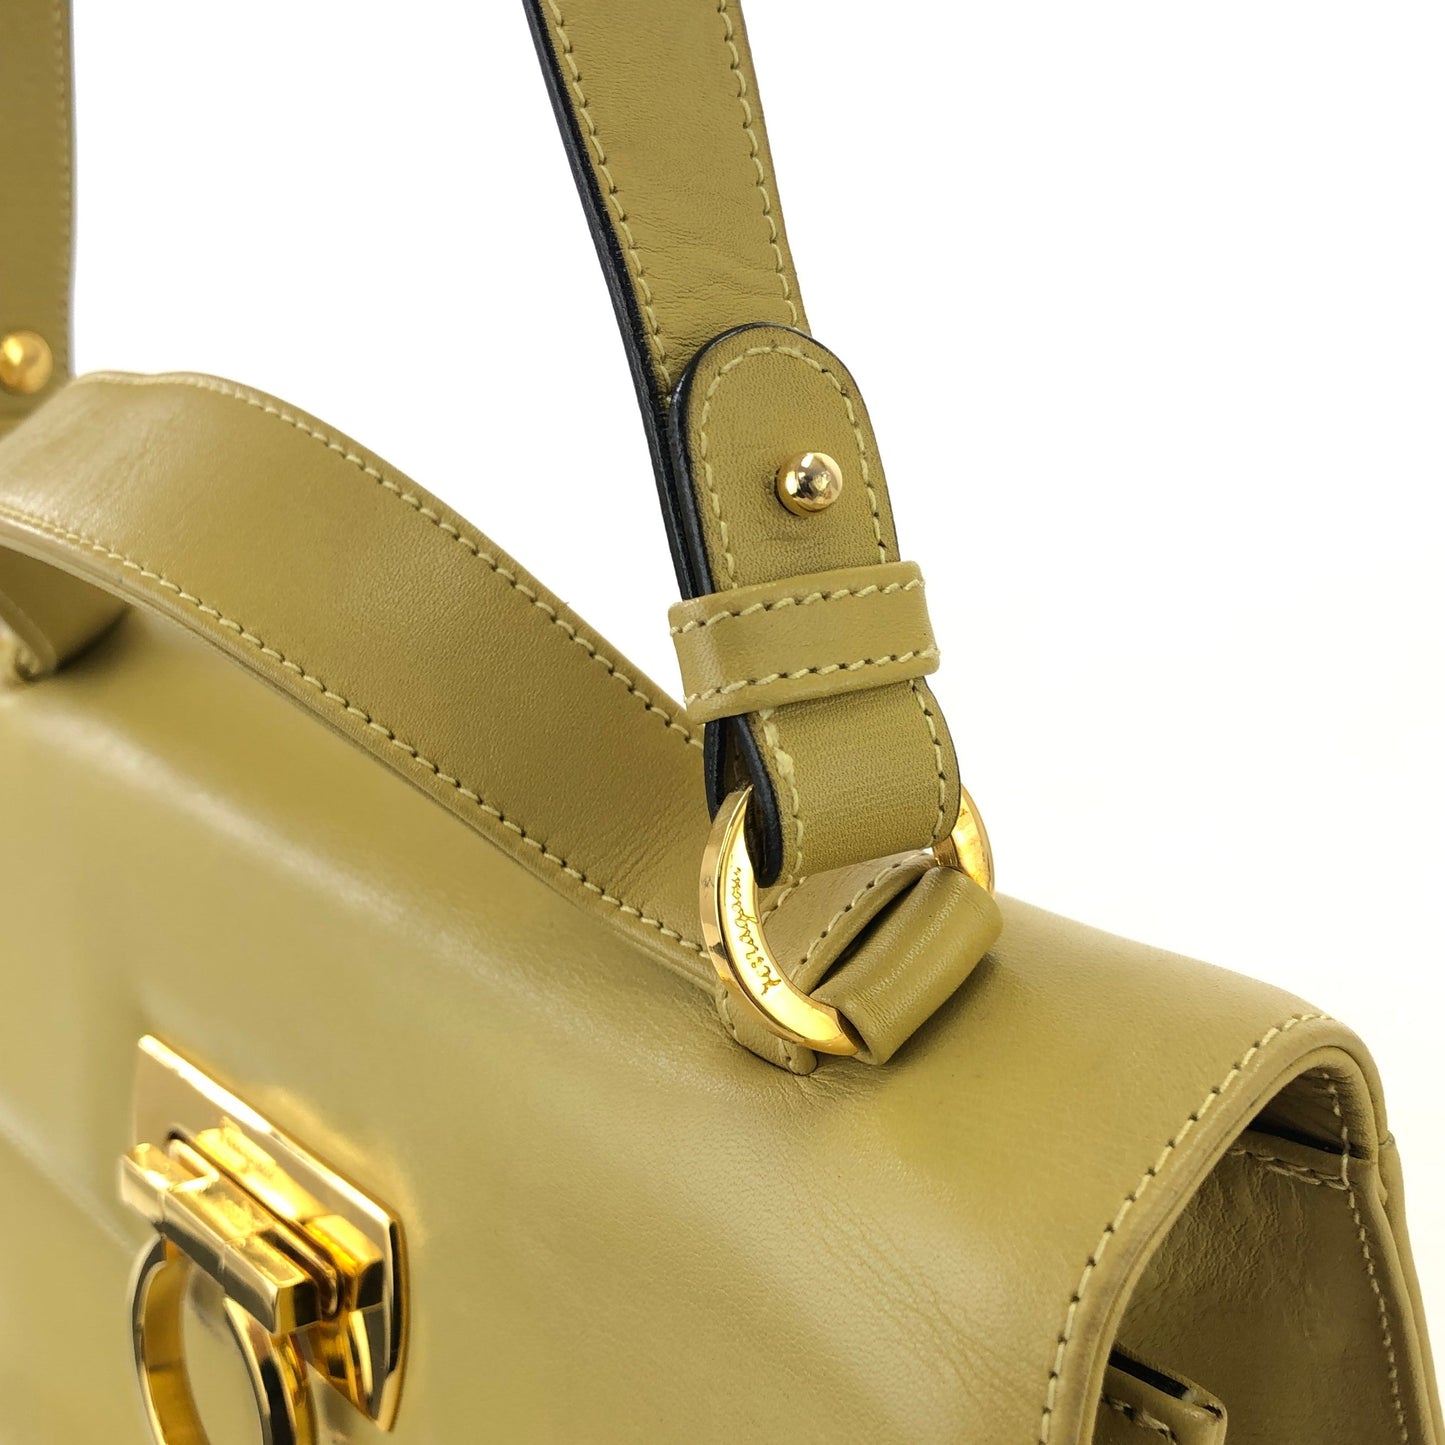 Salvatore Ferragamo Gancini Leather 2way Shoulderbag Handbag Beige Vintage Old yellow ei4hpe